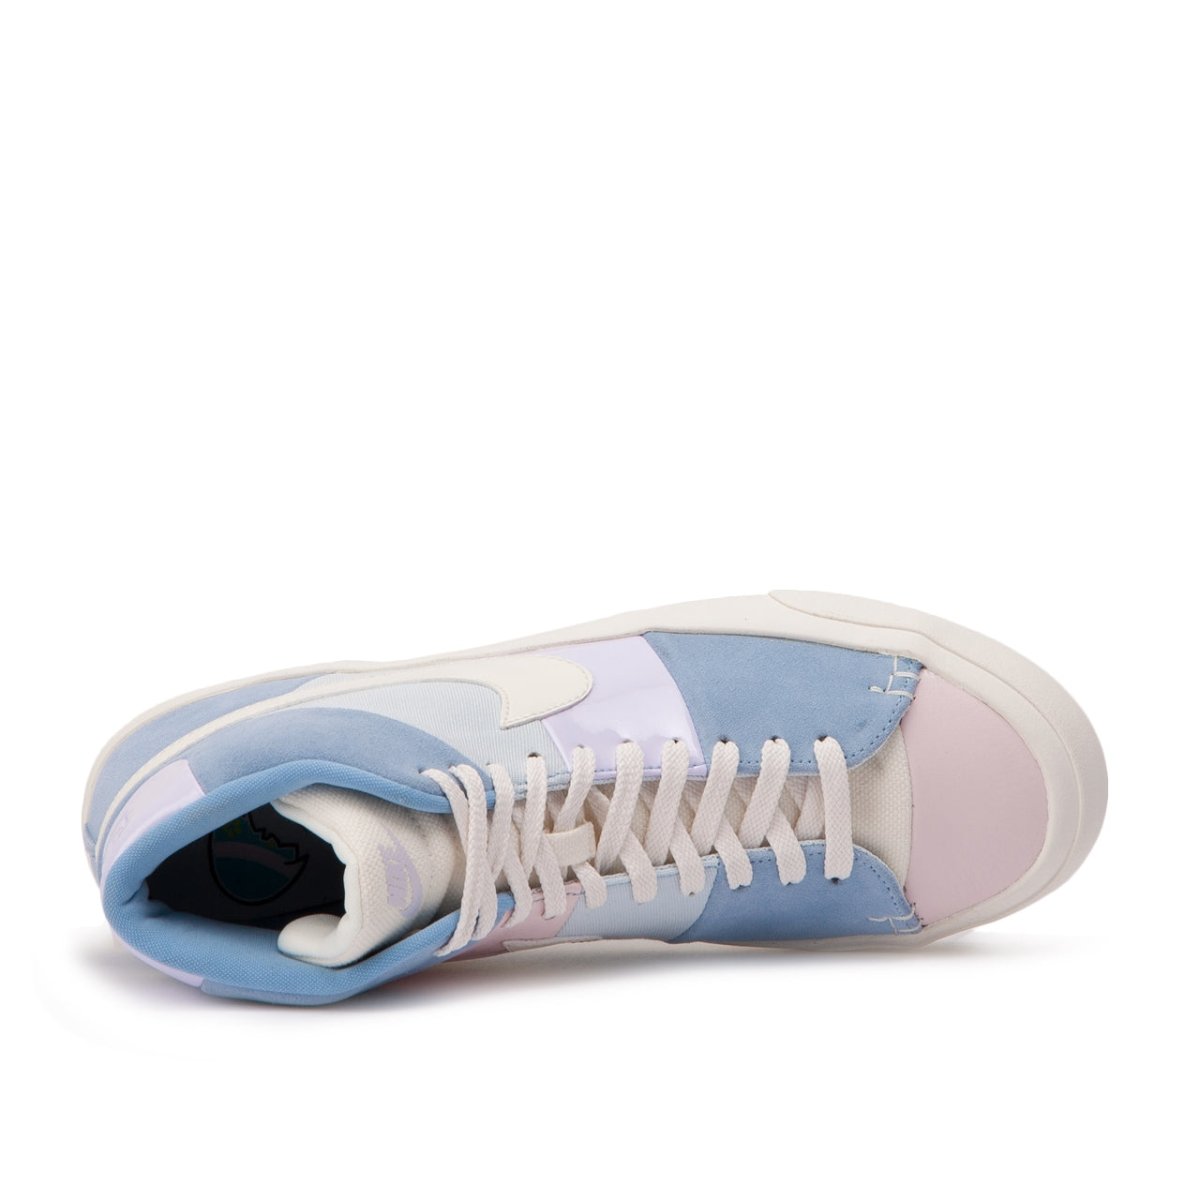 Nike Blazer Royal Easter QS (Pink / Sail / Hellblau)  - Allike Store